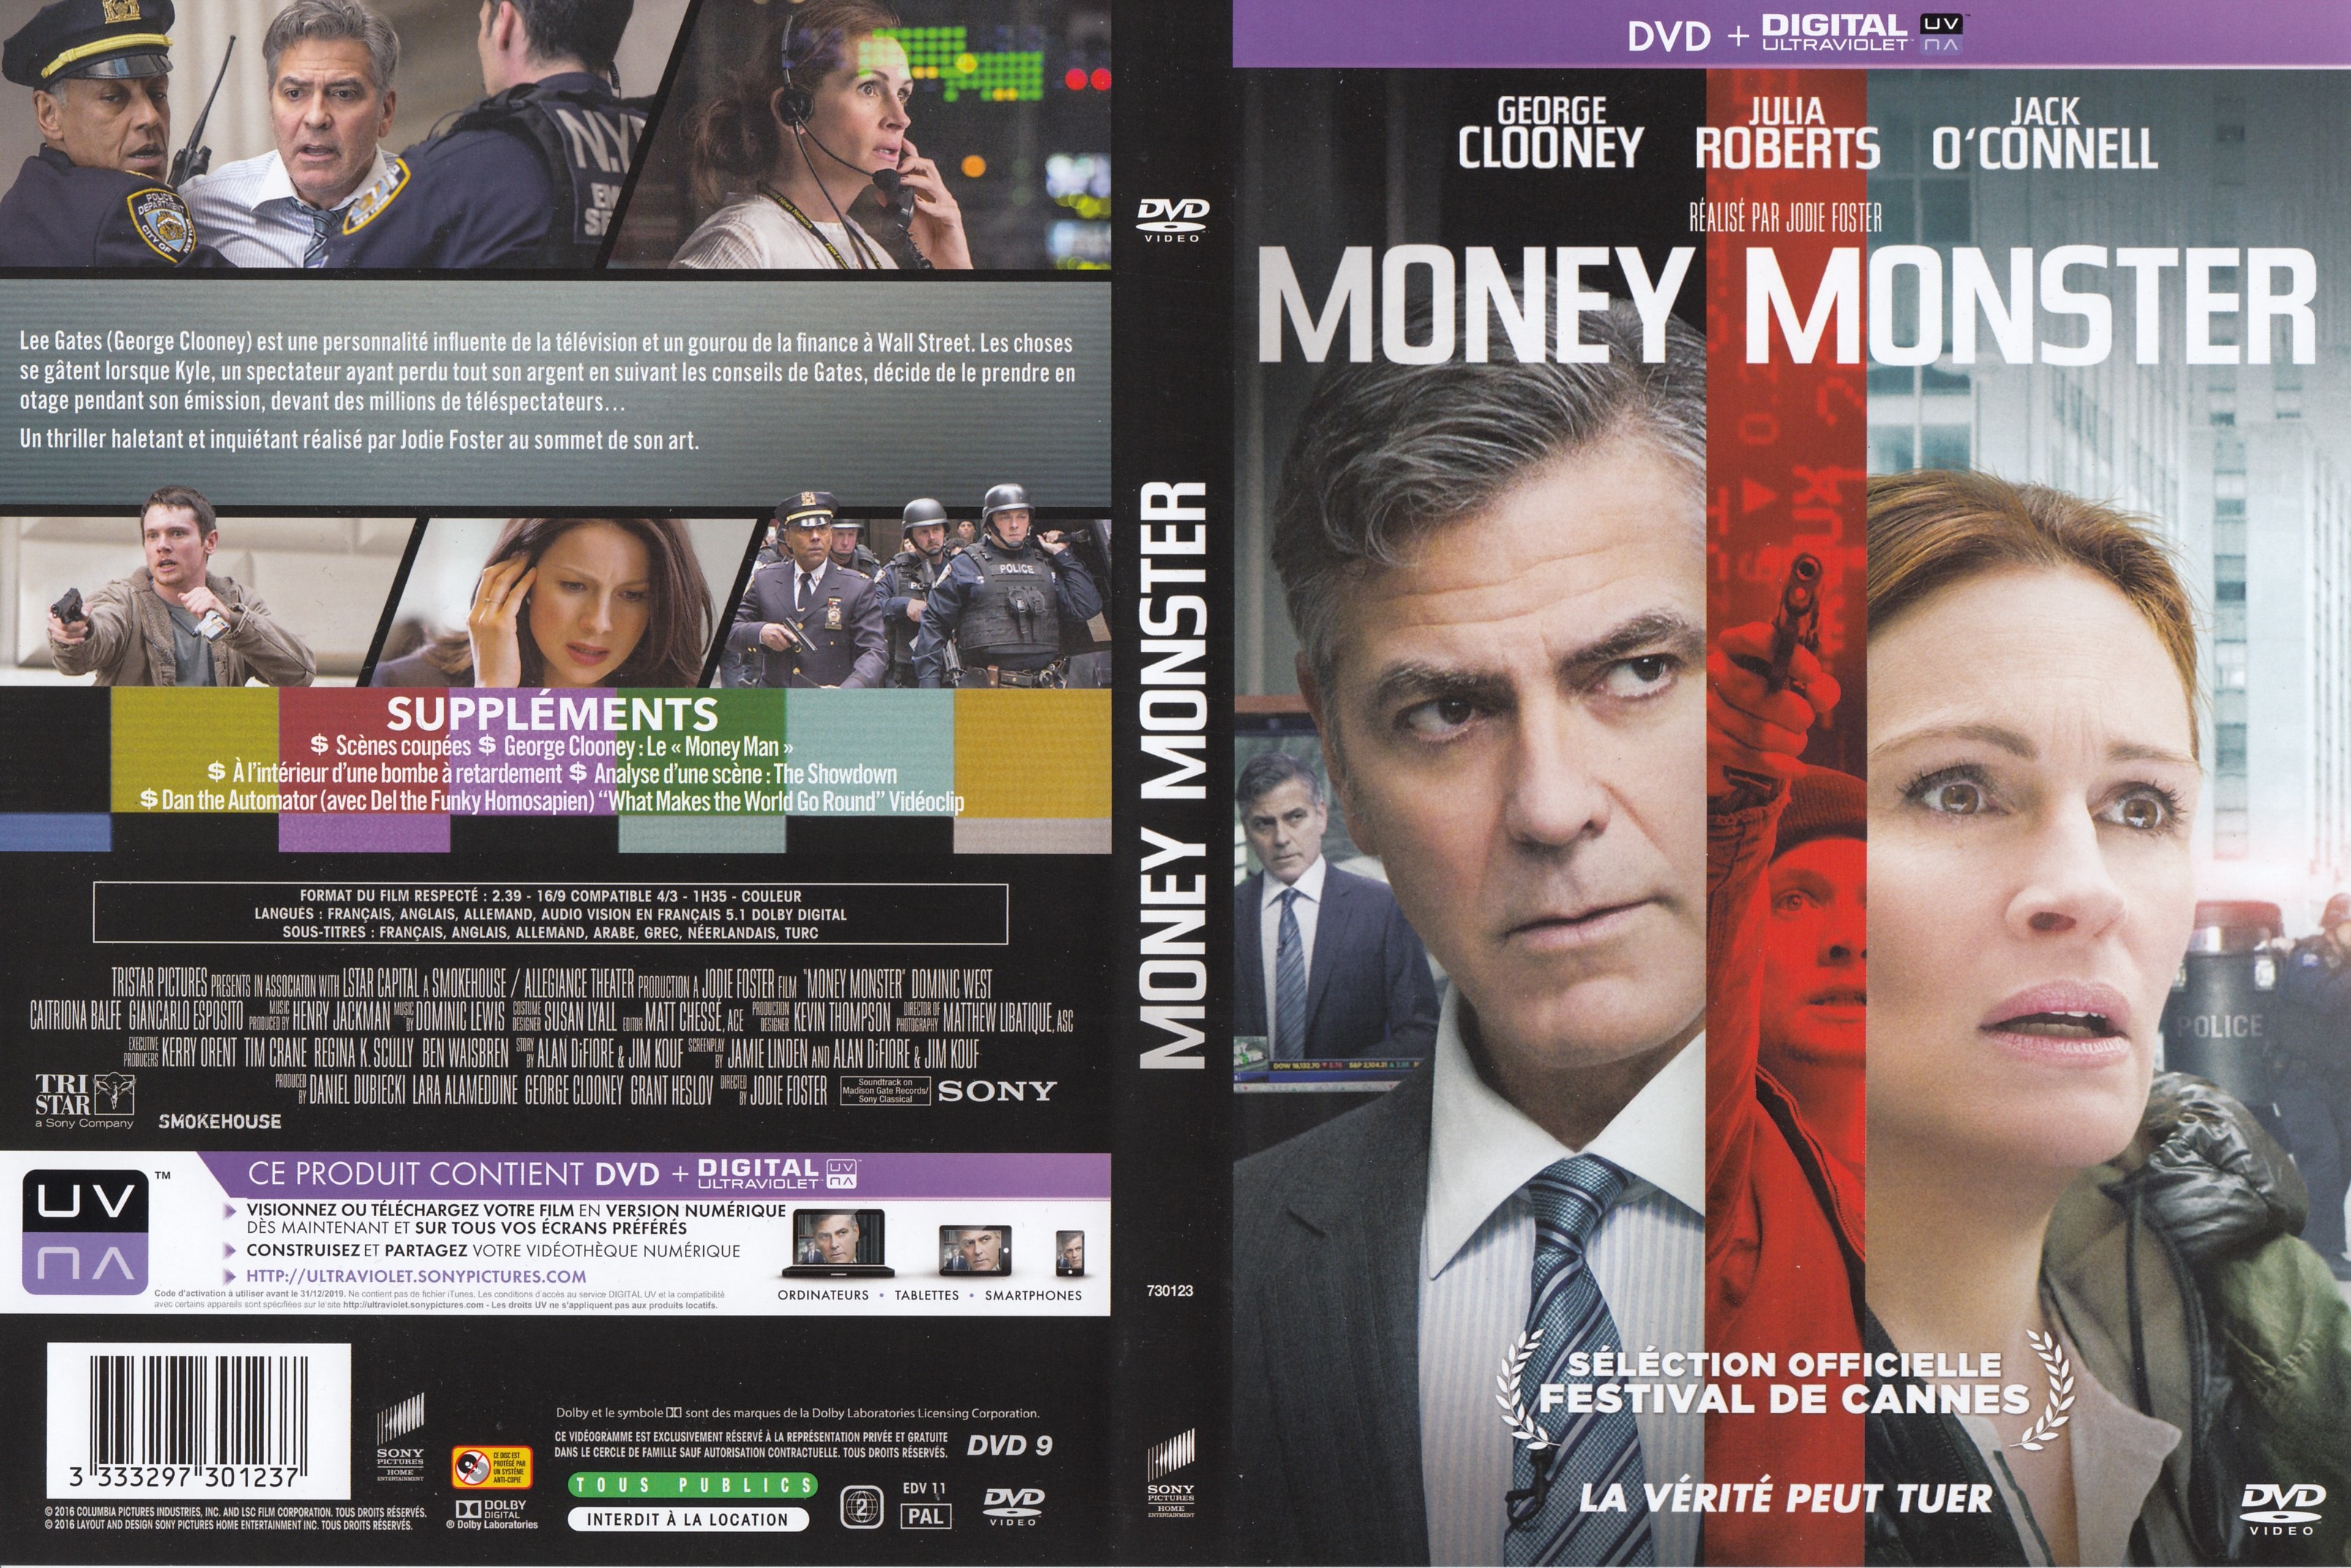 Jaquette DVD Money Monster